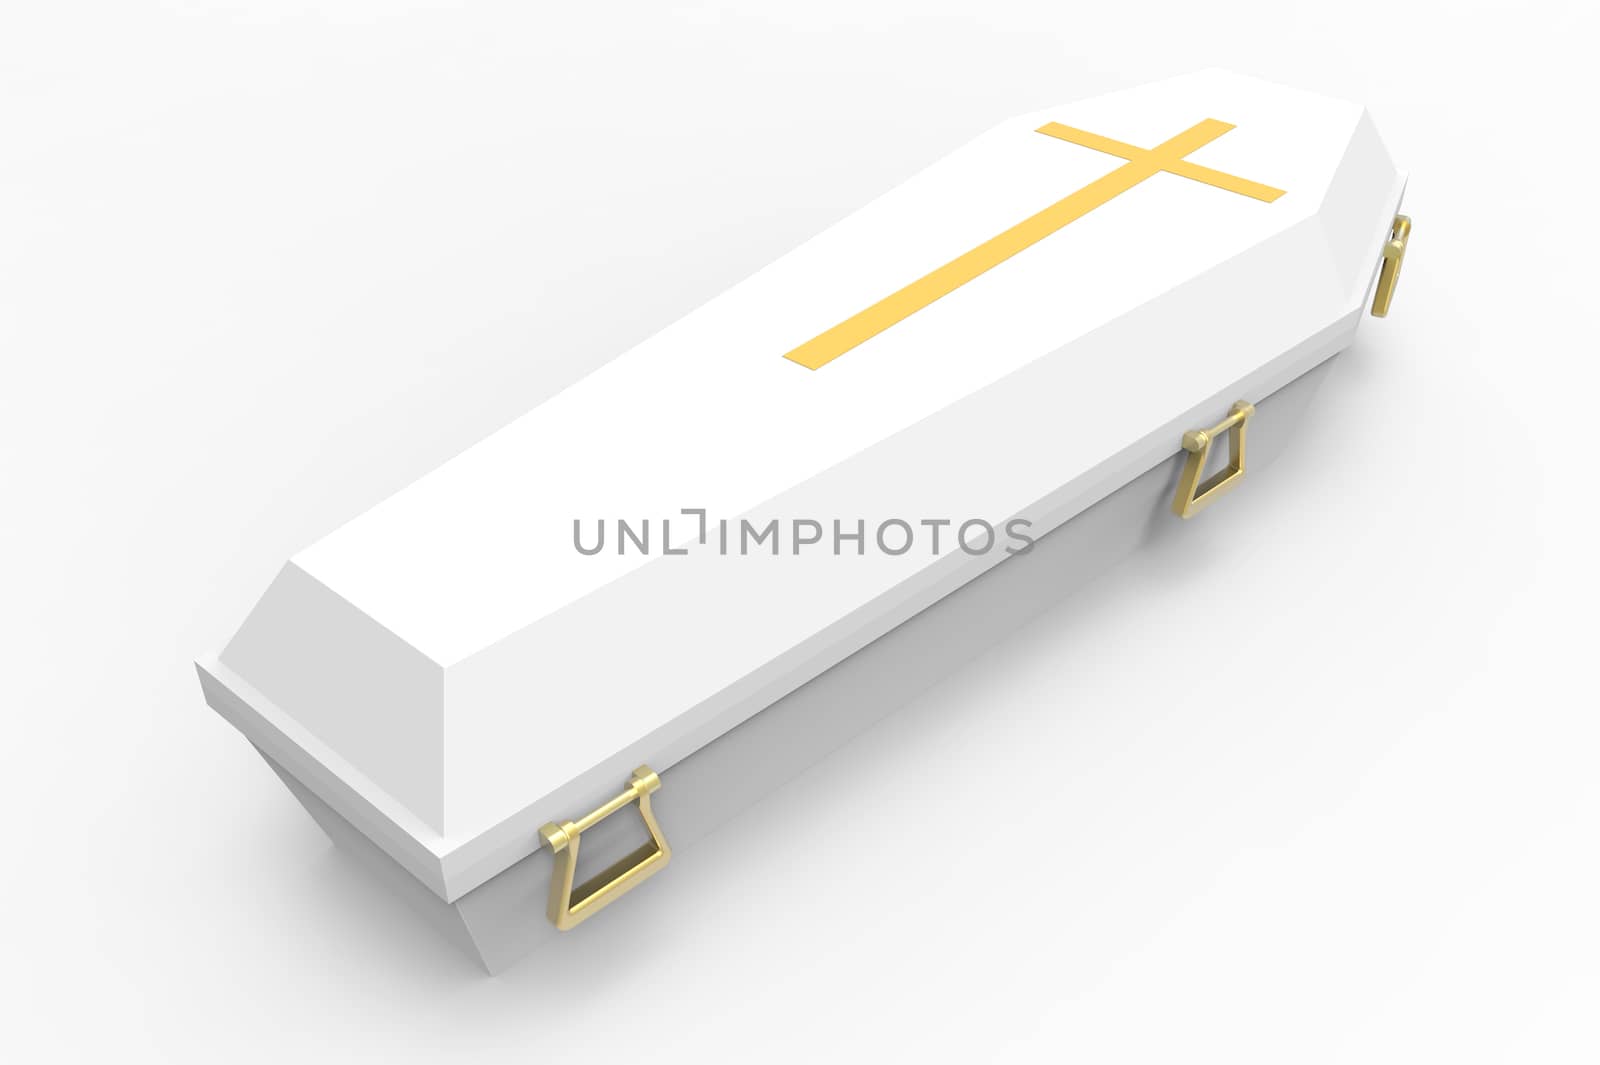 Coffin by Boris15